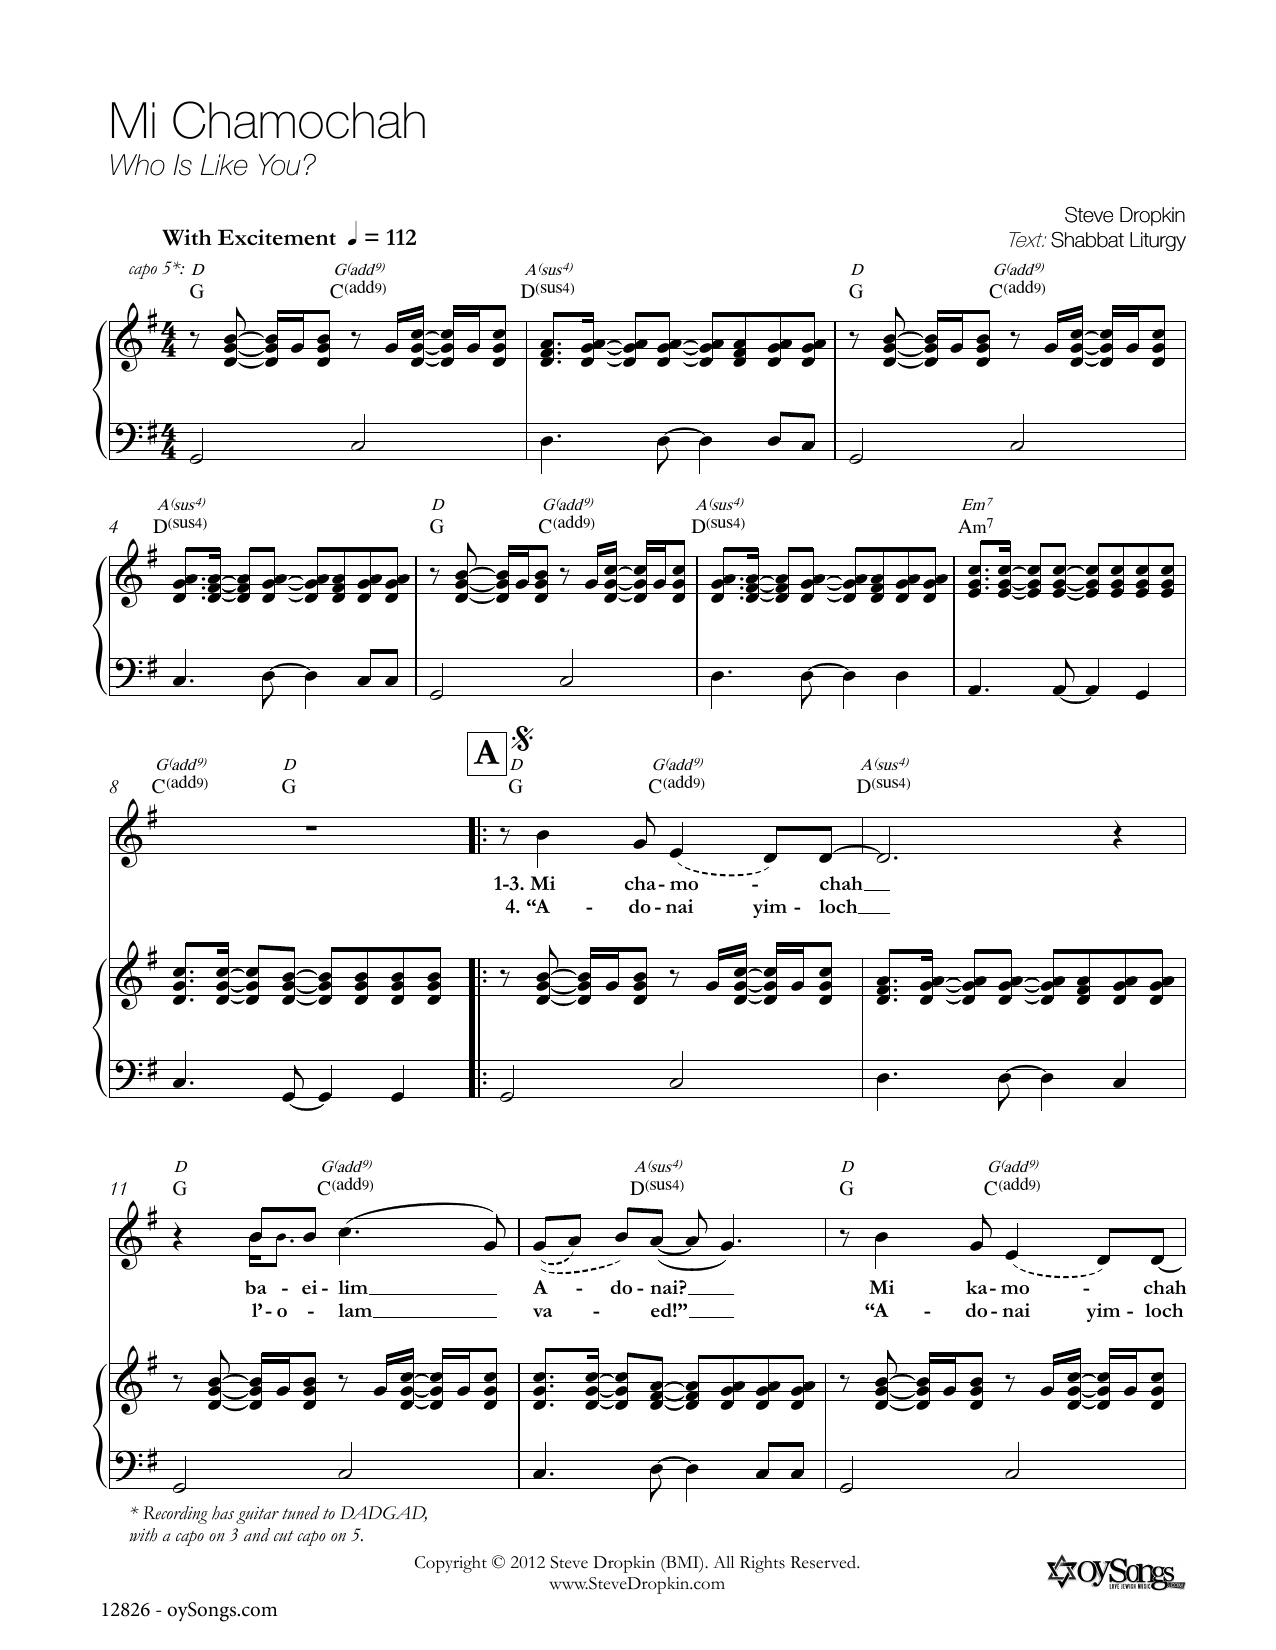 Steve Dropkin Mi Chamochah Sheet Music Notes & Chords for Melody Line, Lyrics & Chords - Download or Print PDF